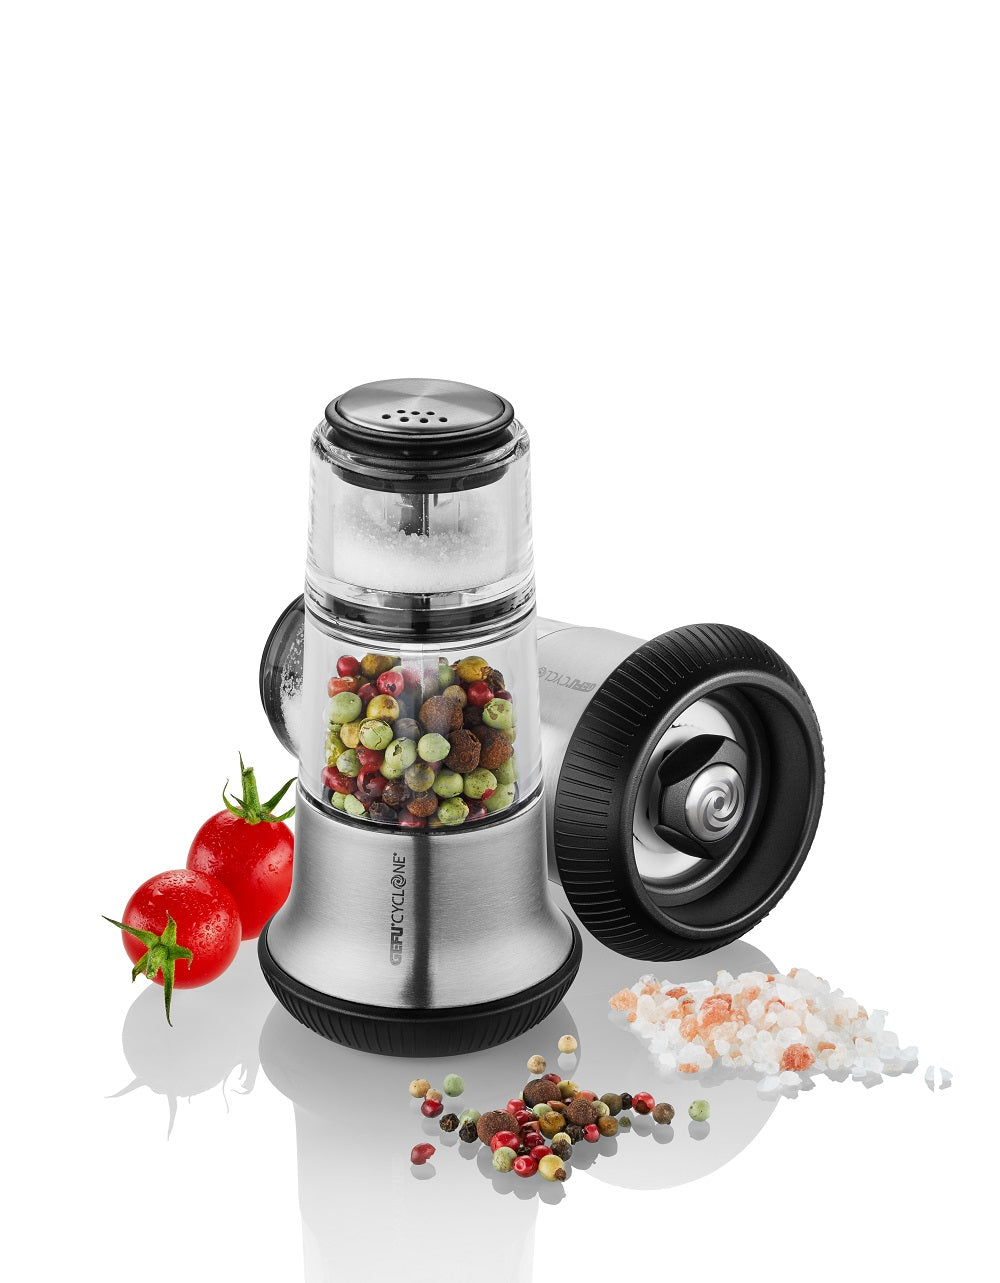 Salt or pepper mill GIVA, electric with tilt sensor – Gourmet